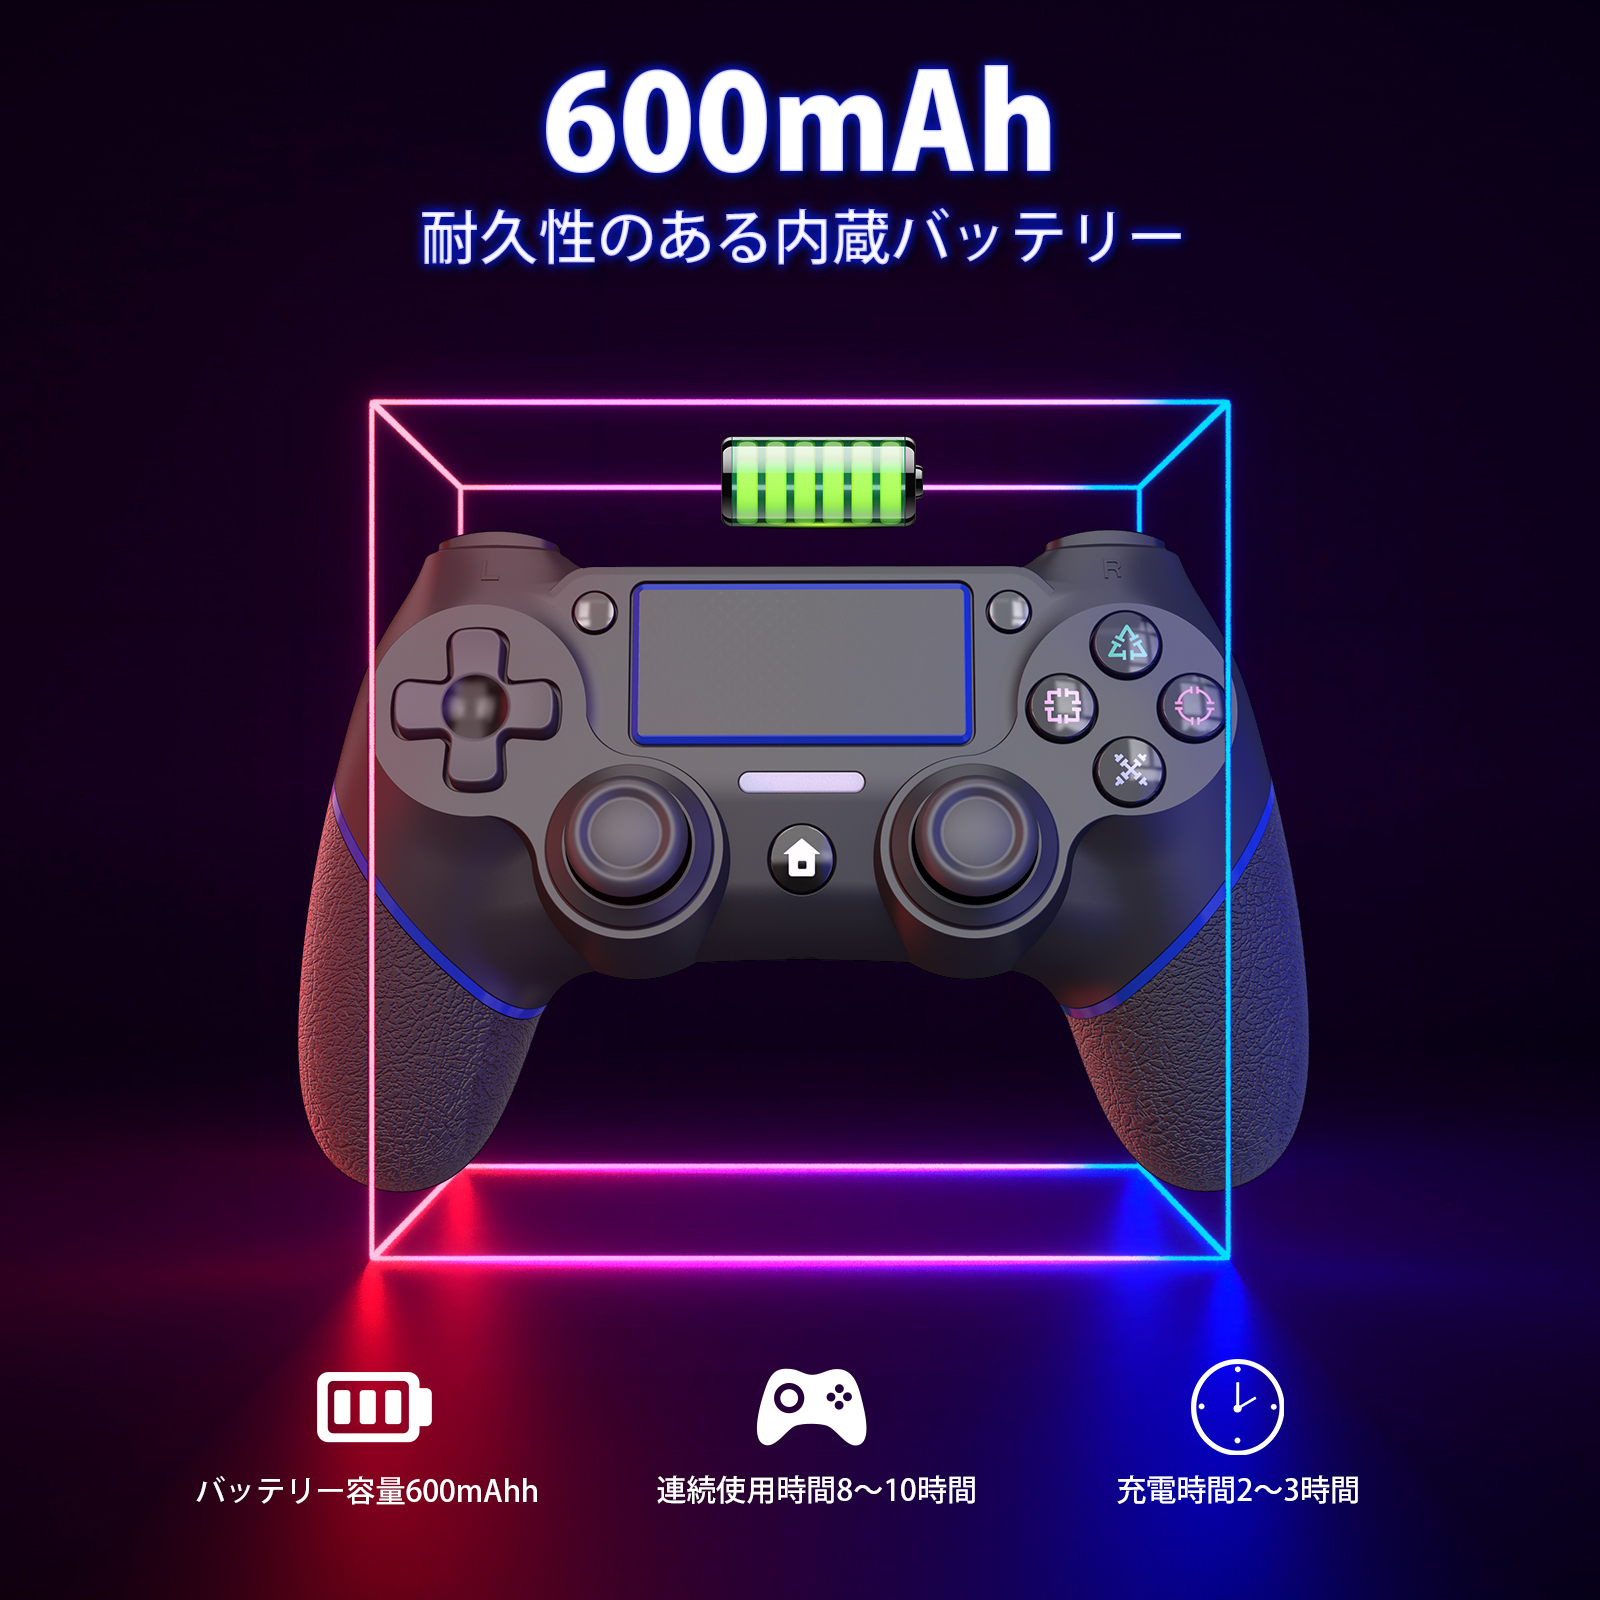 PS4用 コントローラー ワイヤレス 最新バージョン 600mAh Bluetooth リンク遅延なし ジャイロセンサー機能 イヤホンジャック  ゲームパット 搭載 高耐久ボタン 二重振動 | JoySky